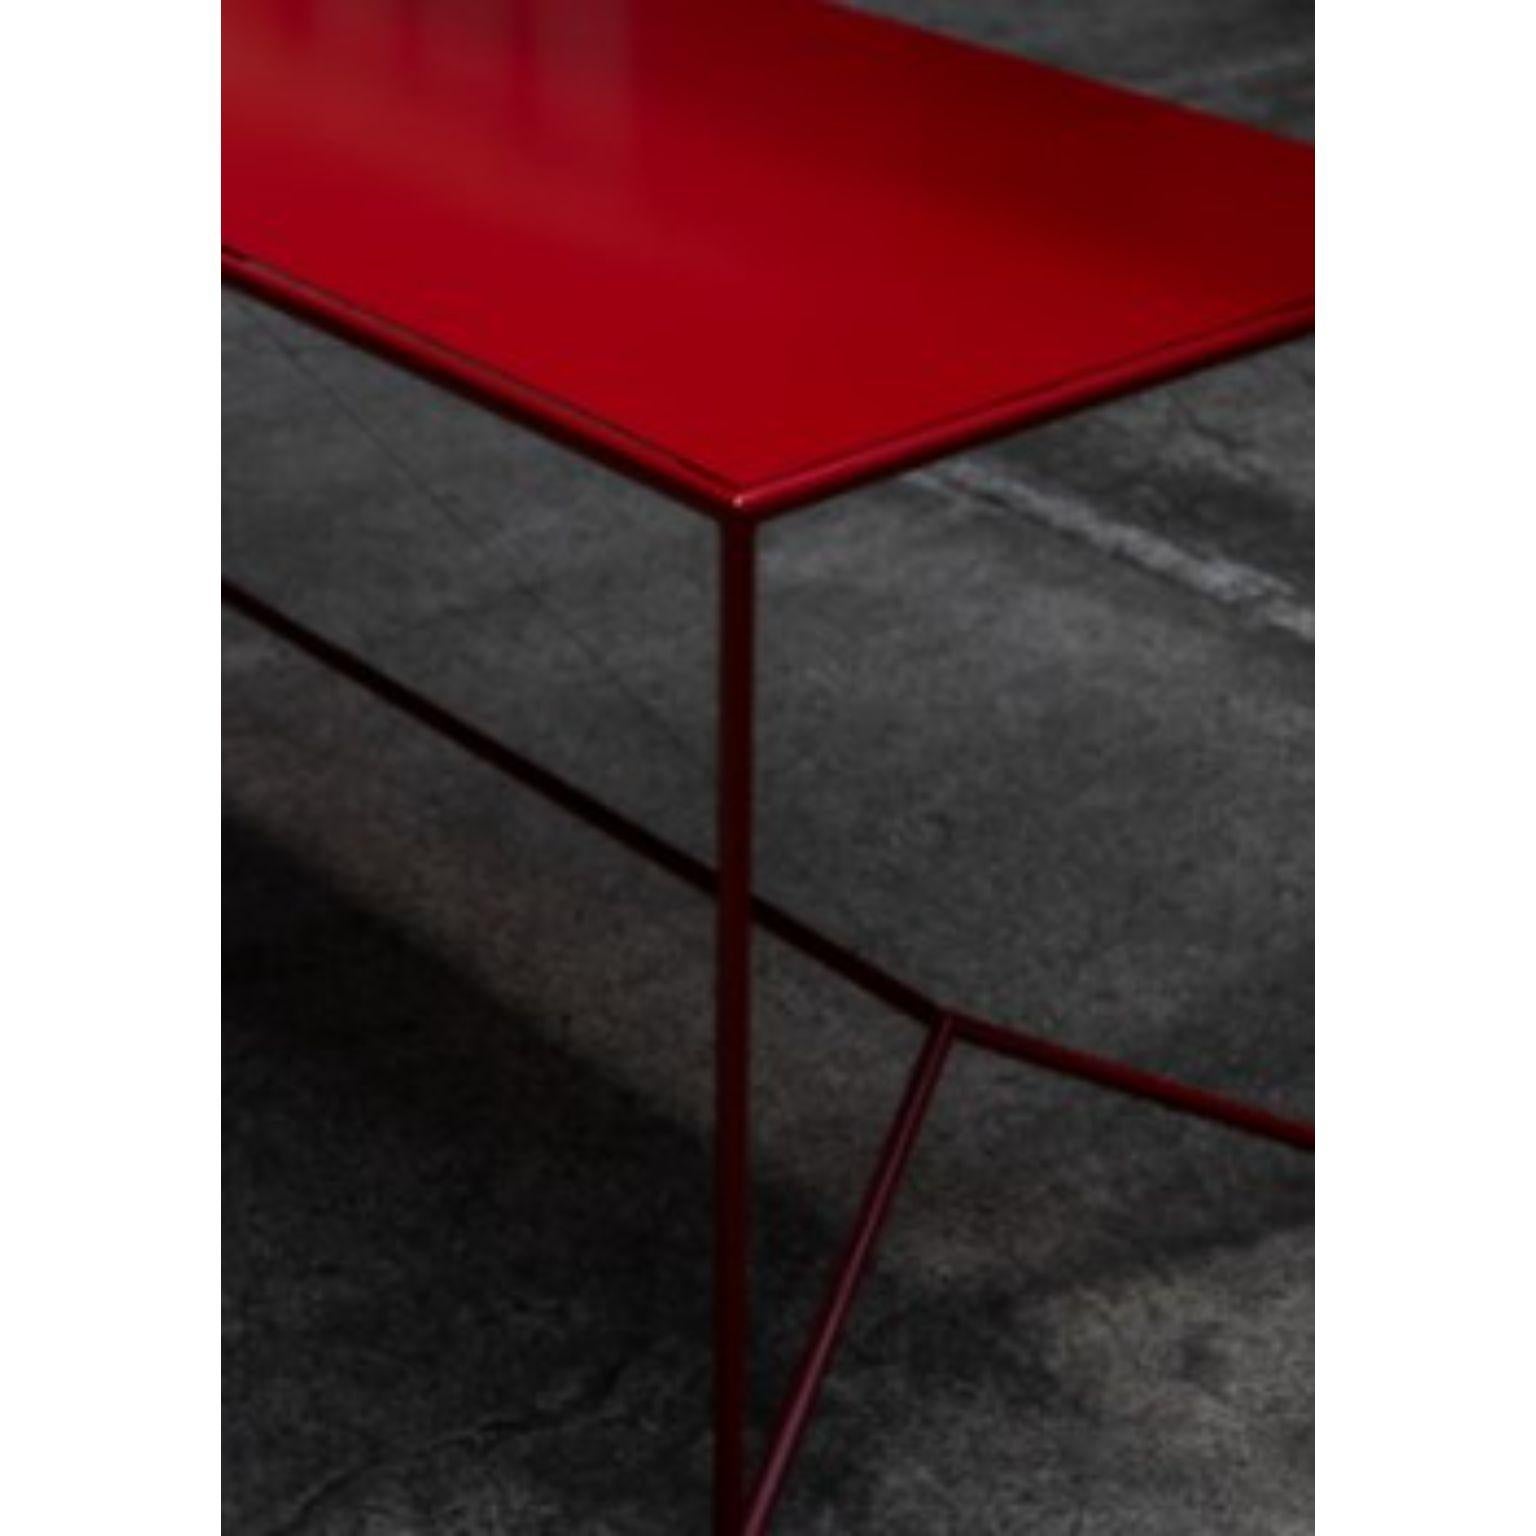 Belgian Campi Di Colore Red Table by Maria Scarpulla